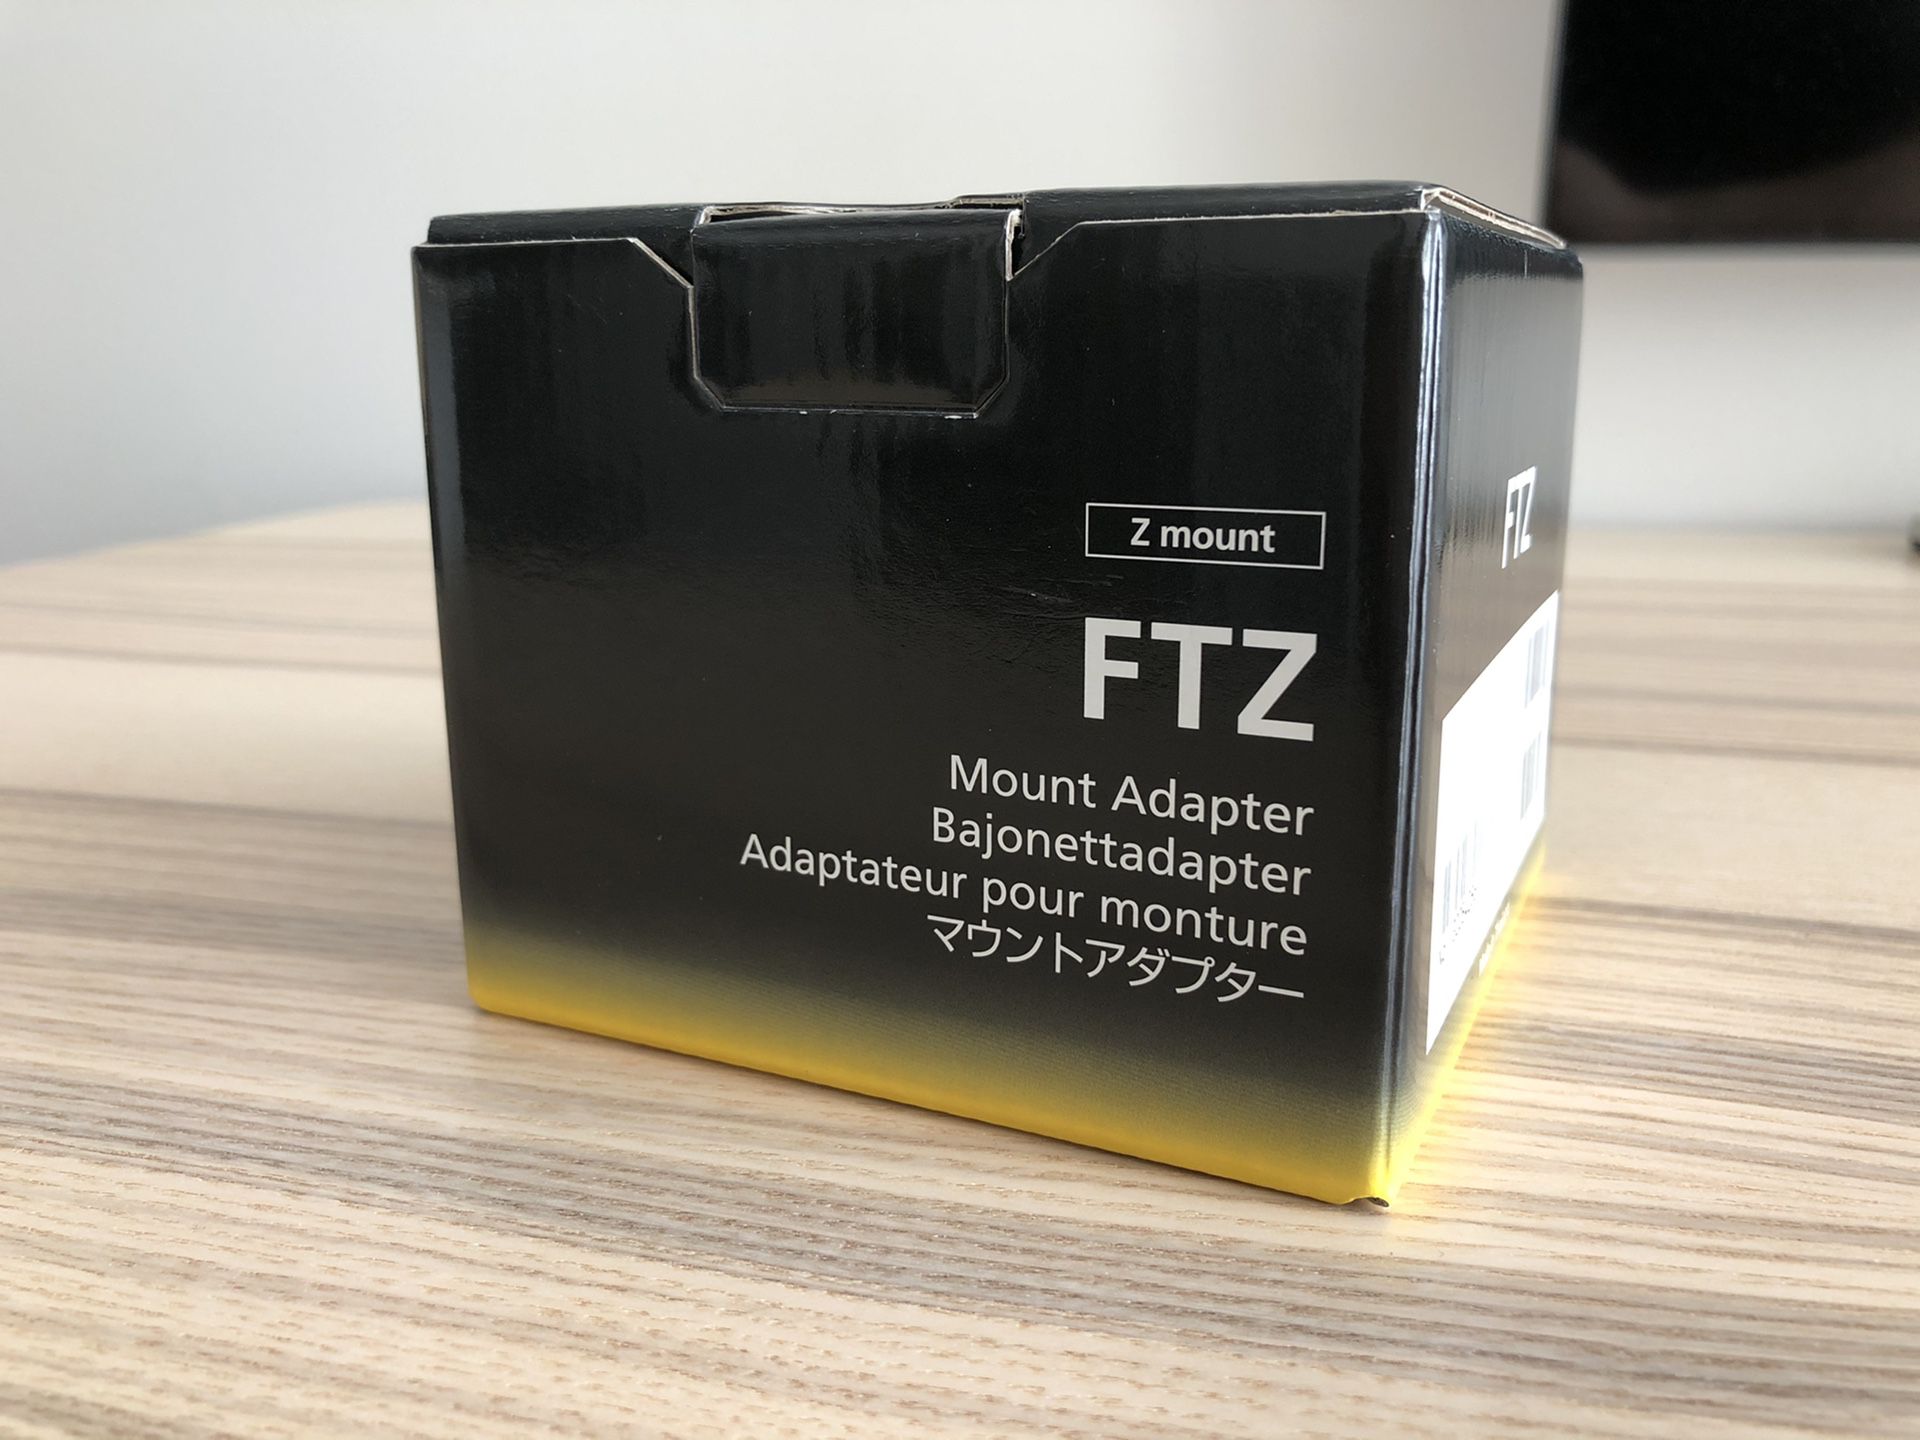 Nikon FTZ Mount Adapter (New/Unopened)